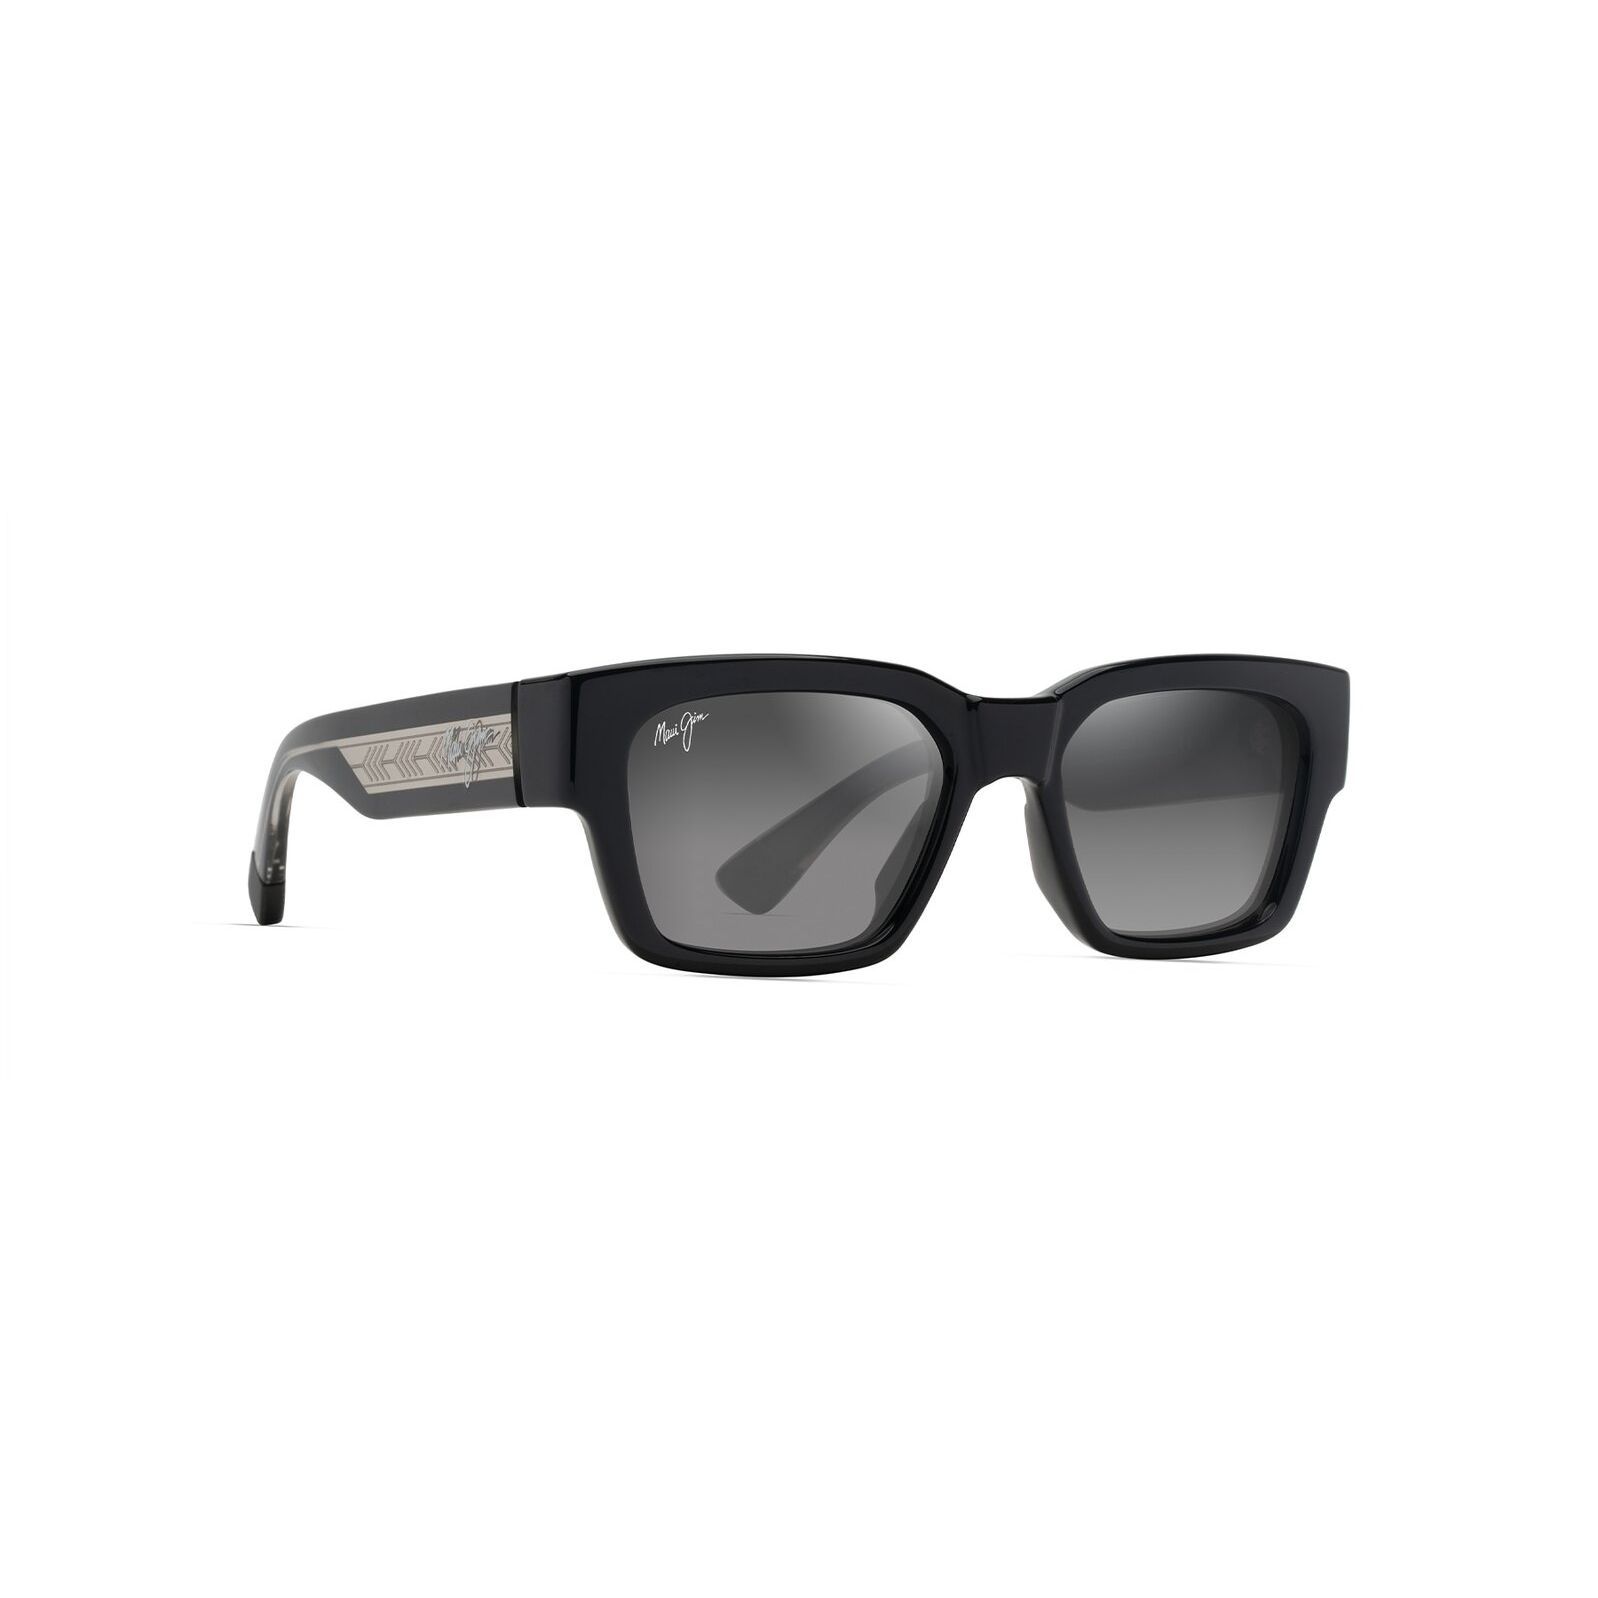 KENUI GS642 Square Sunglasses 14 - size 53